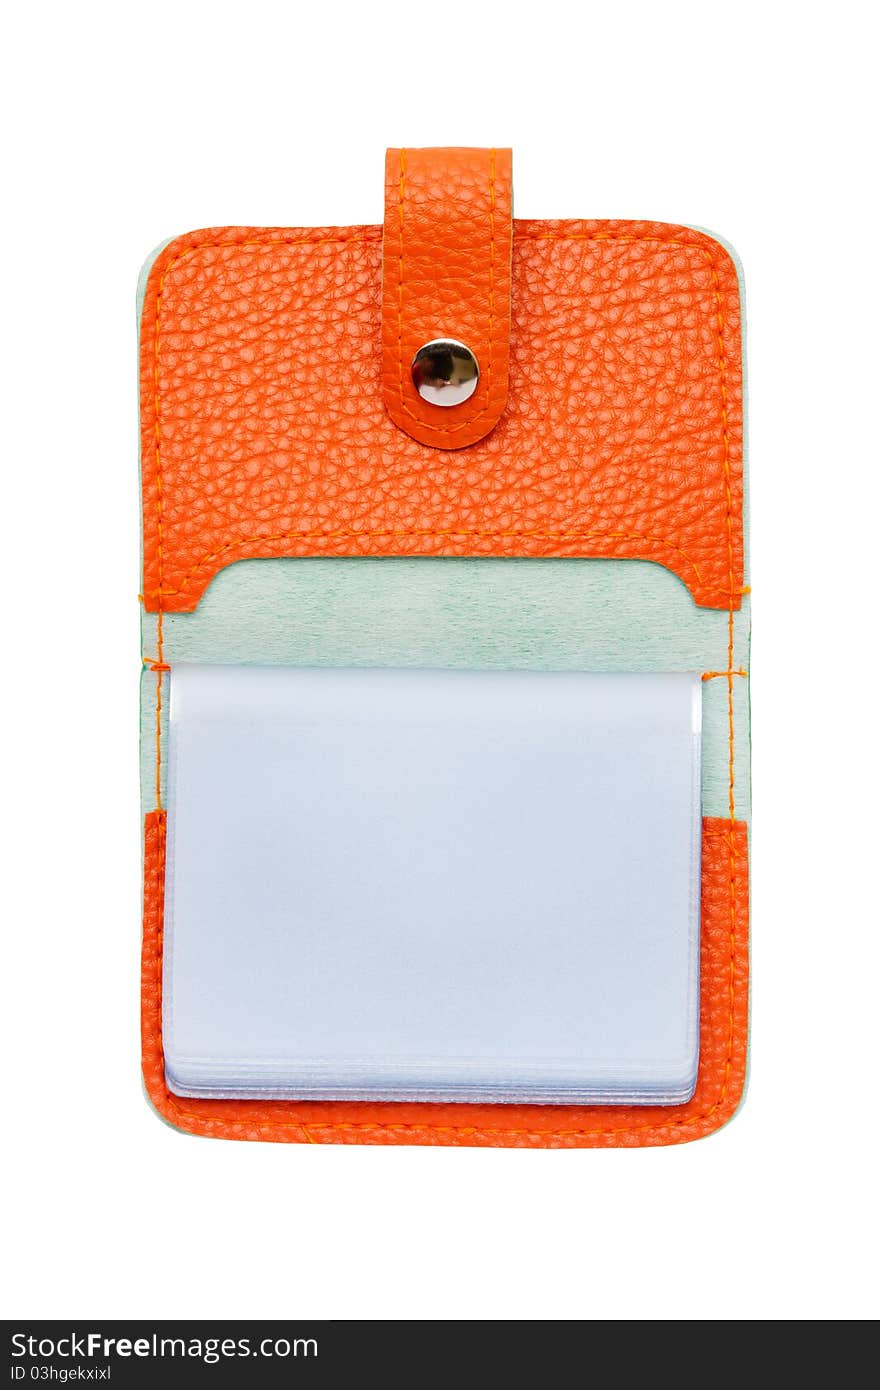 The opened orange card holder bag isolated on the white background